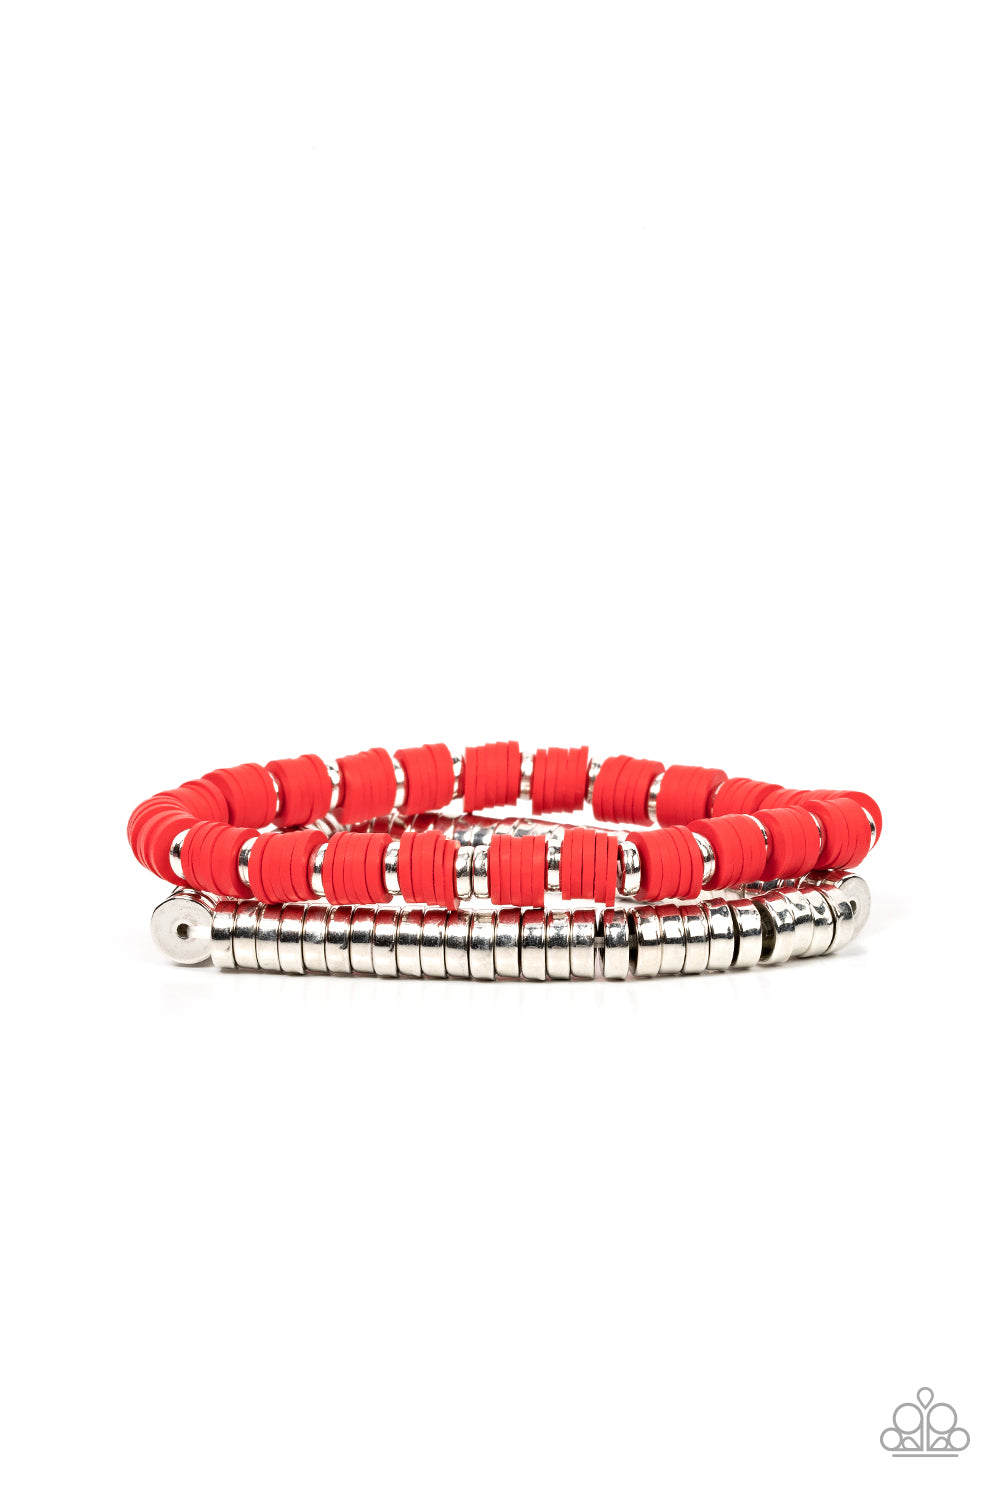 five-dollar-jewelry-catalina-marina-red-paparazzi-accessories